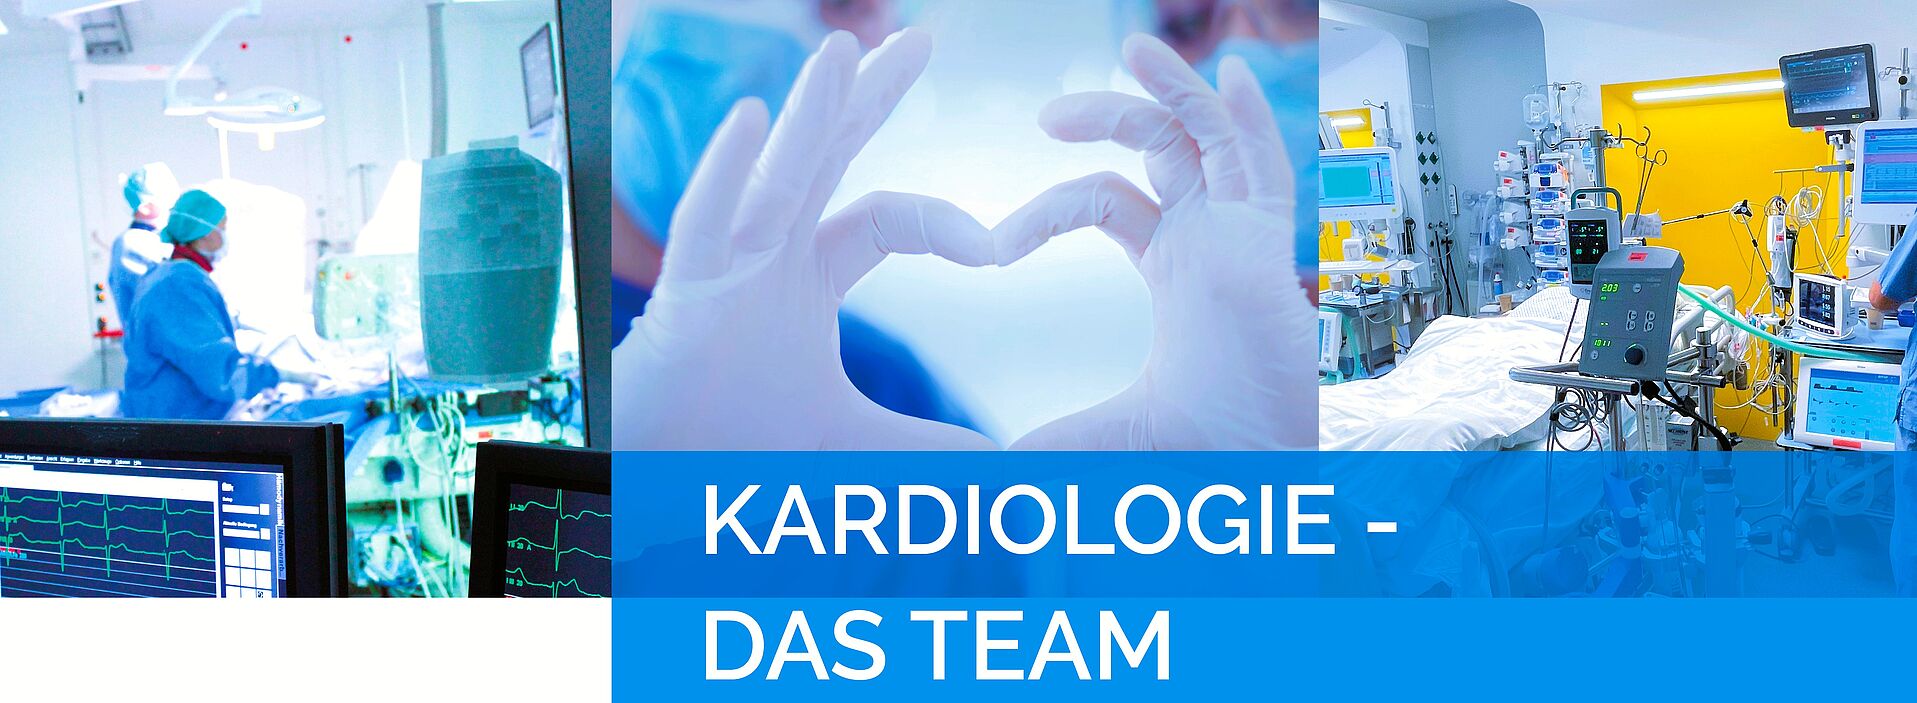 Team Kardiologie